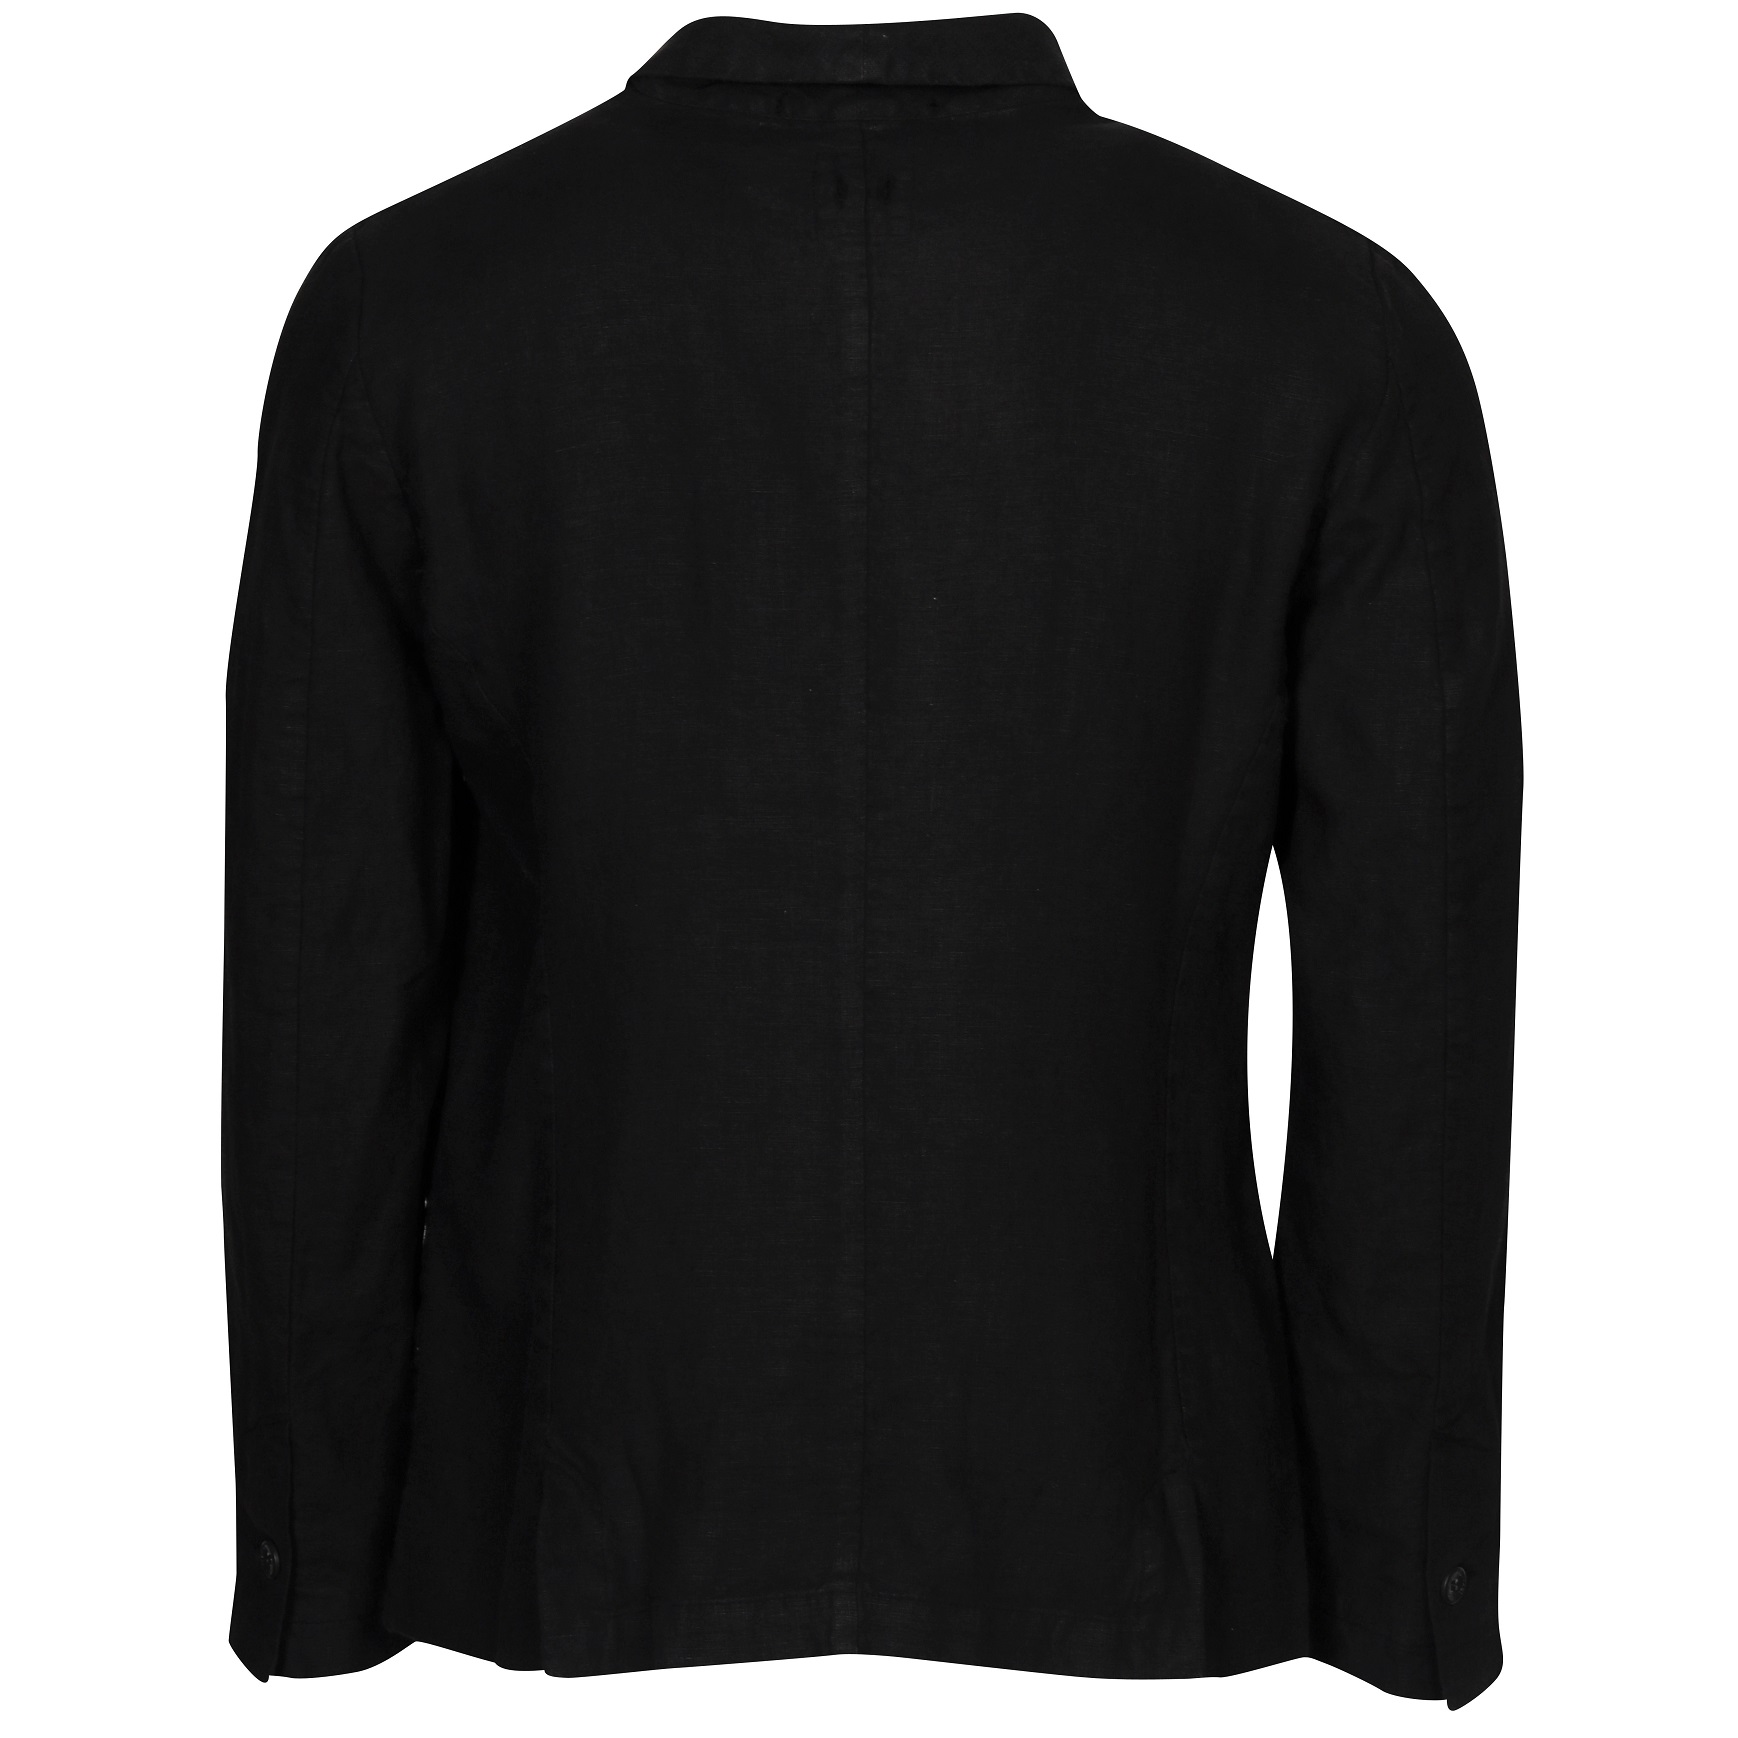 HANNES ROETHER Linen Jacket in Black L